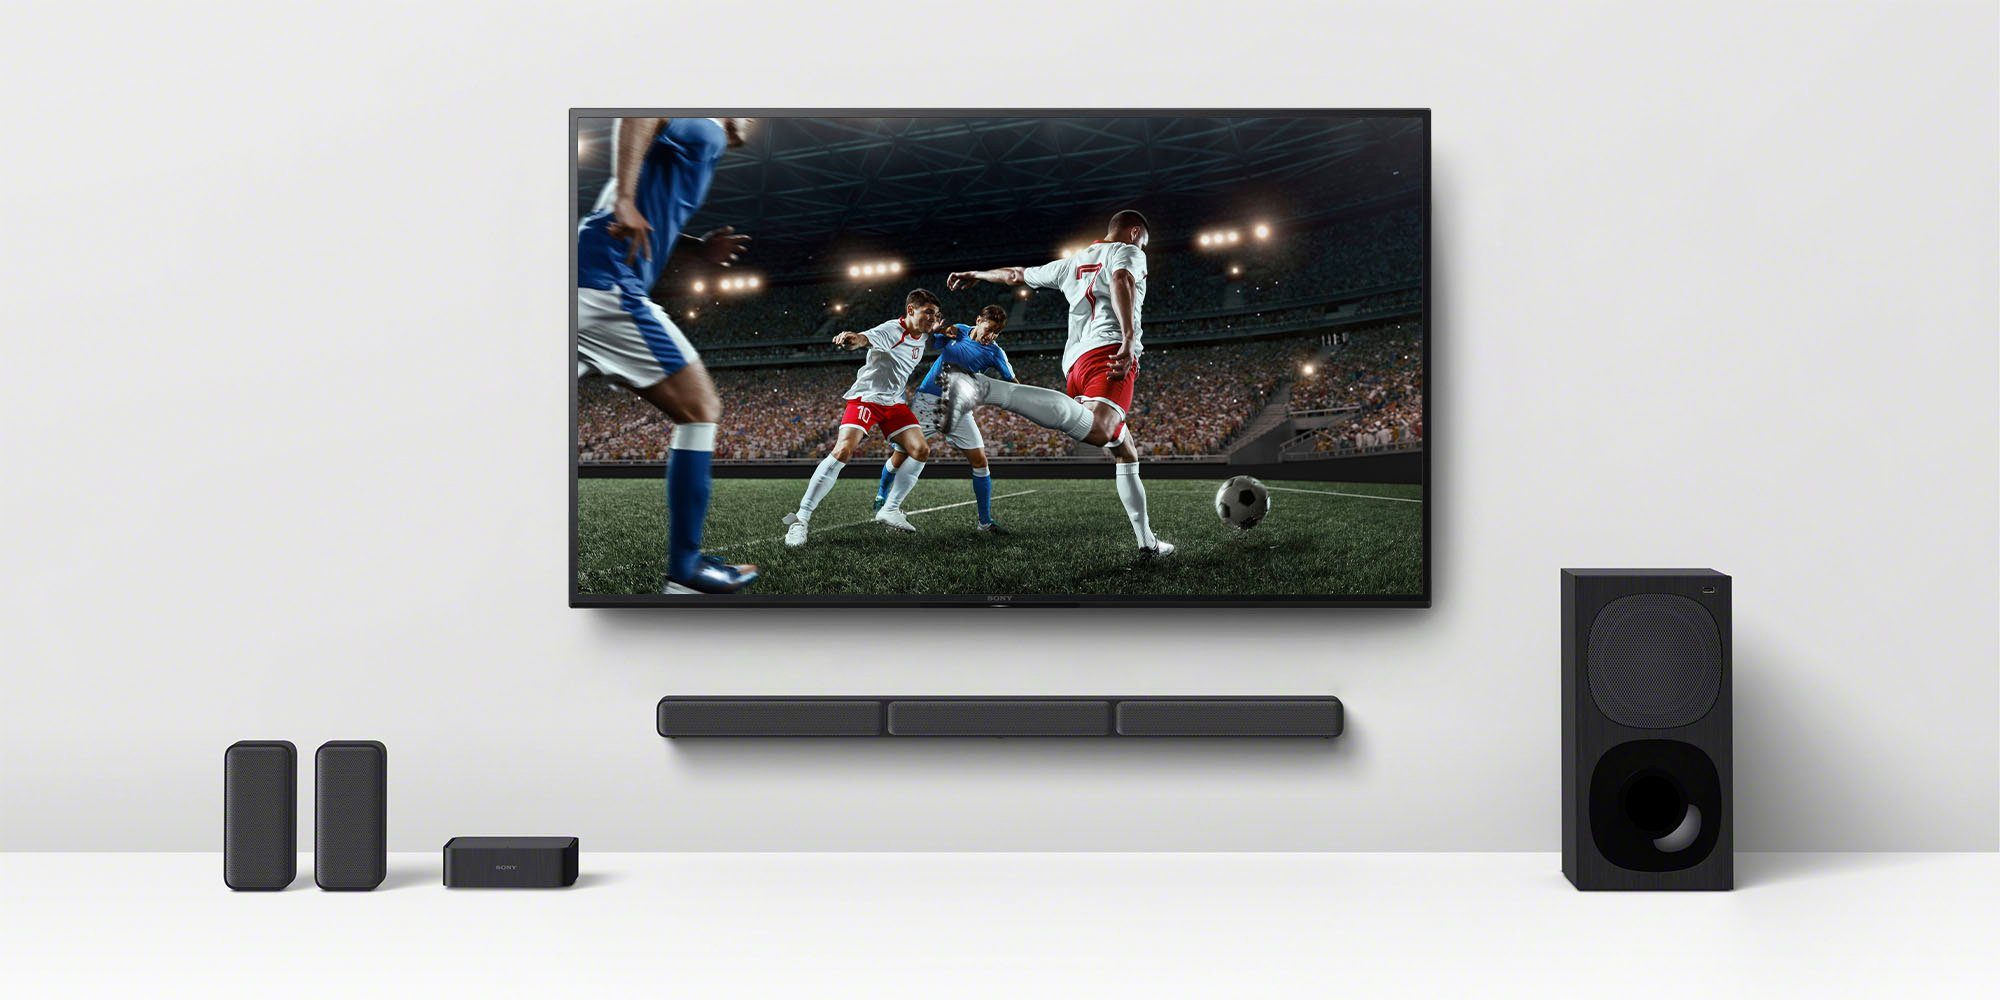 Sony HT-S40R Kanal- 5.1 Soundbar inkl. 600 W, kabellosen (Bluetooth, Rear-Lautsprechern) kabelgebundenem Subwoofer